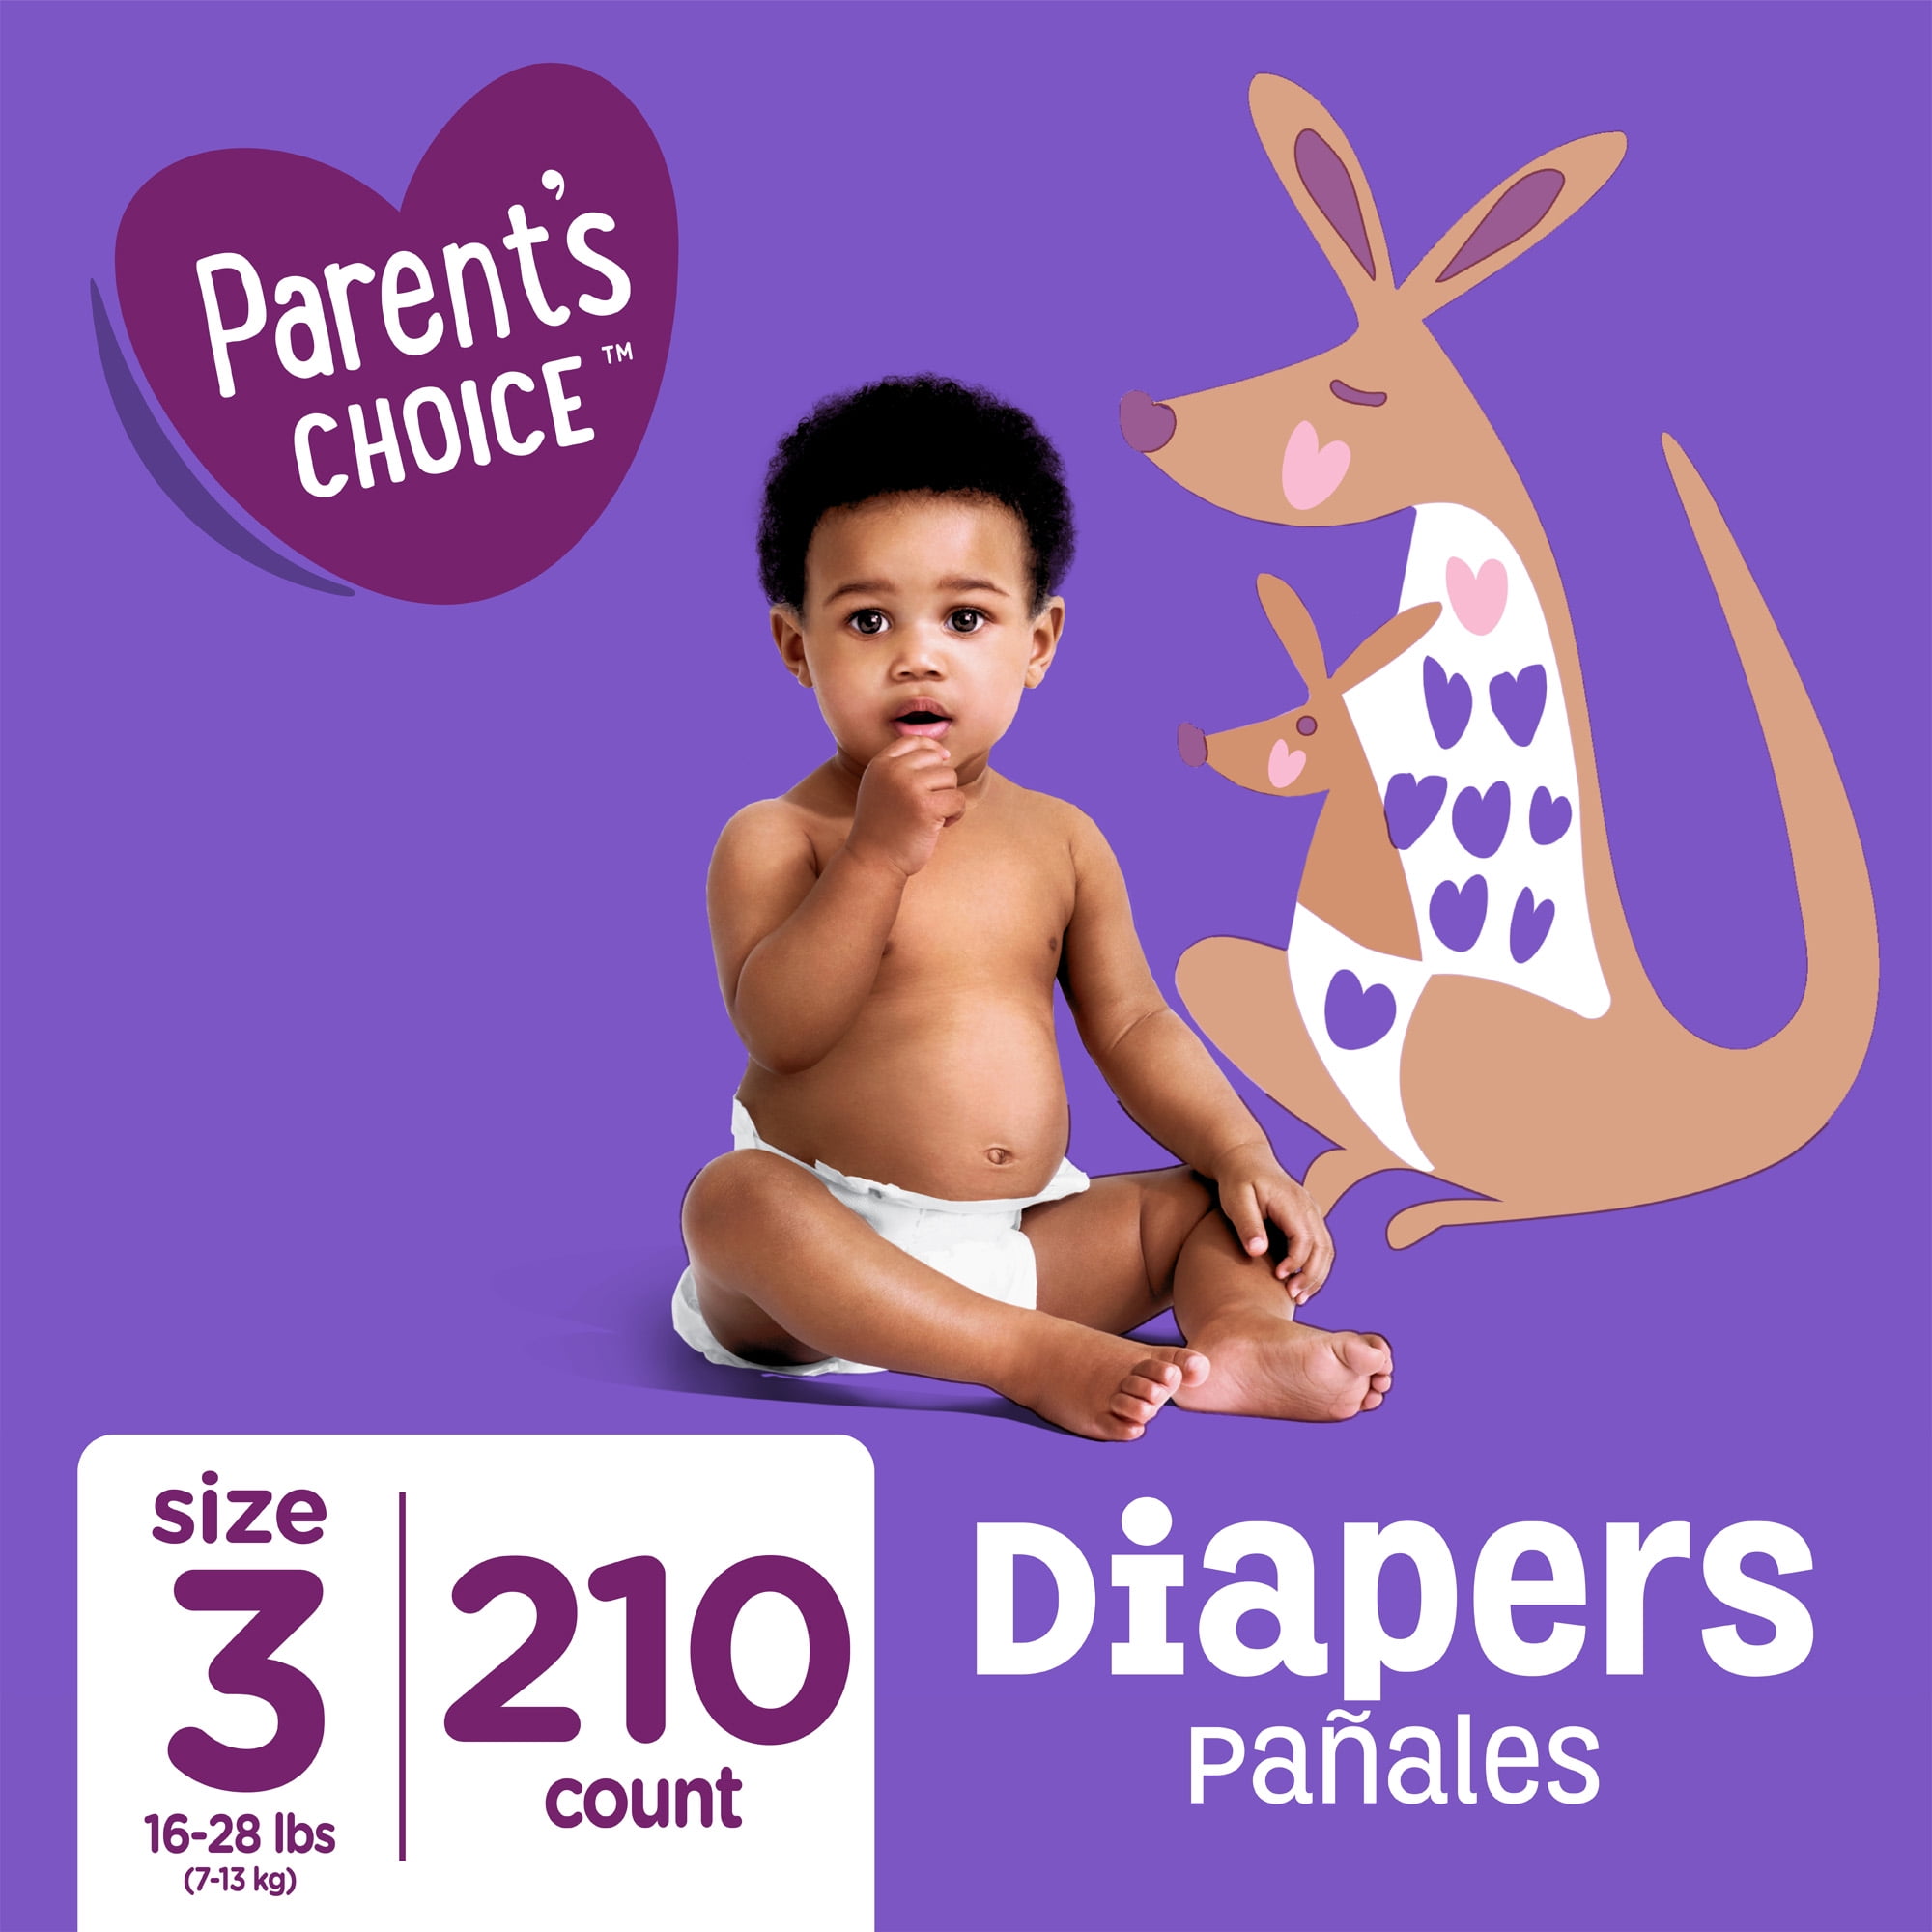 parents choice diapers 3